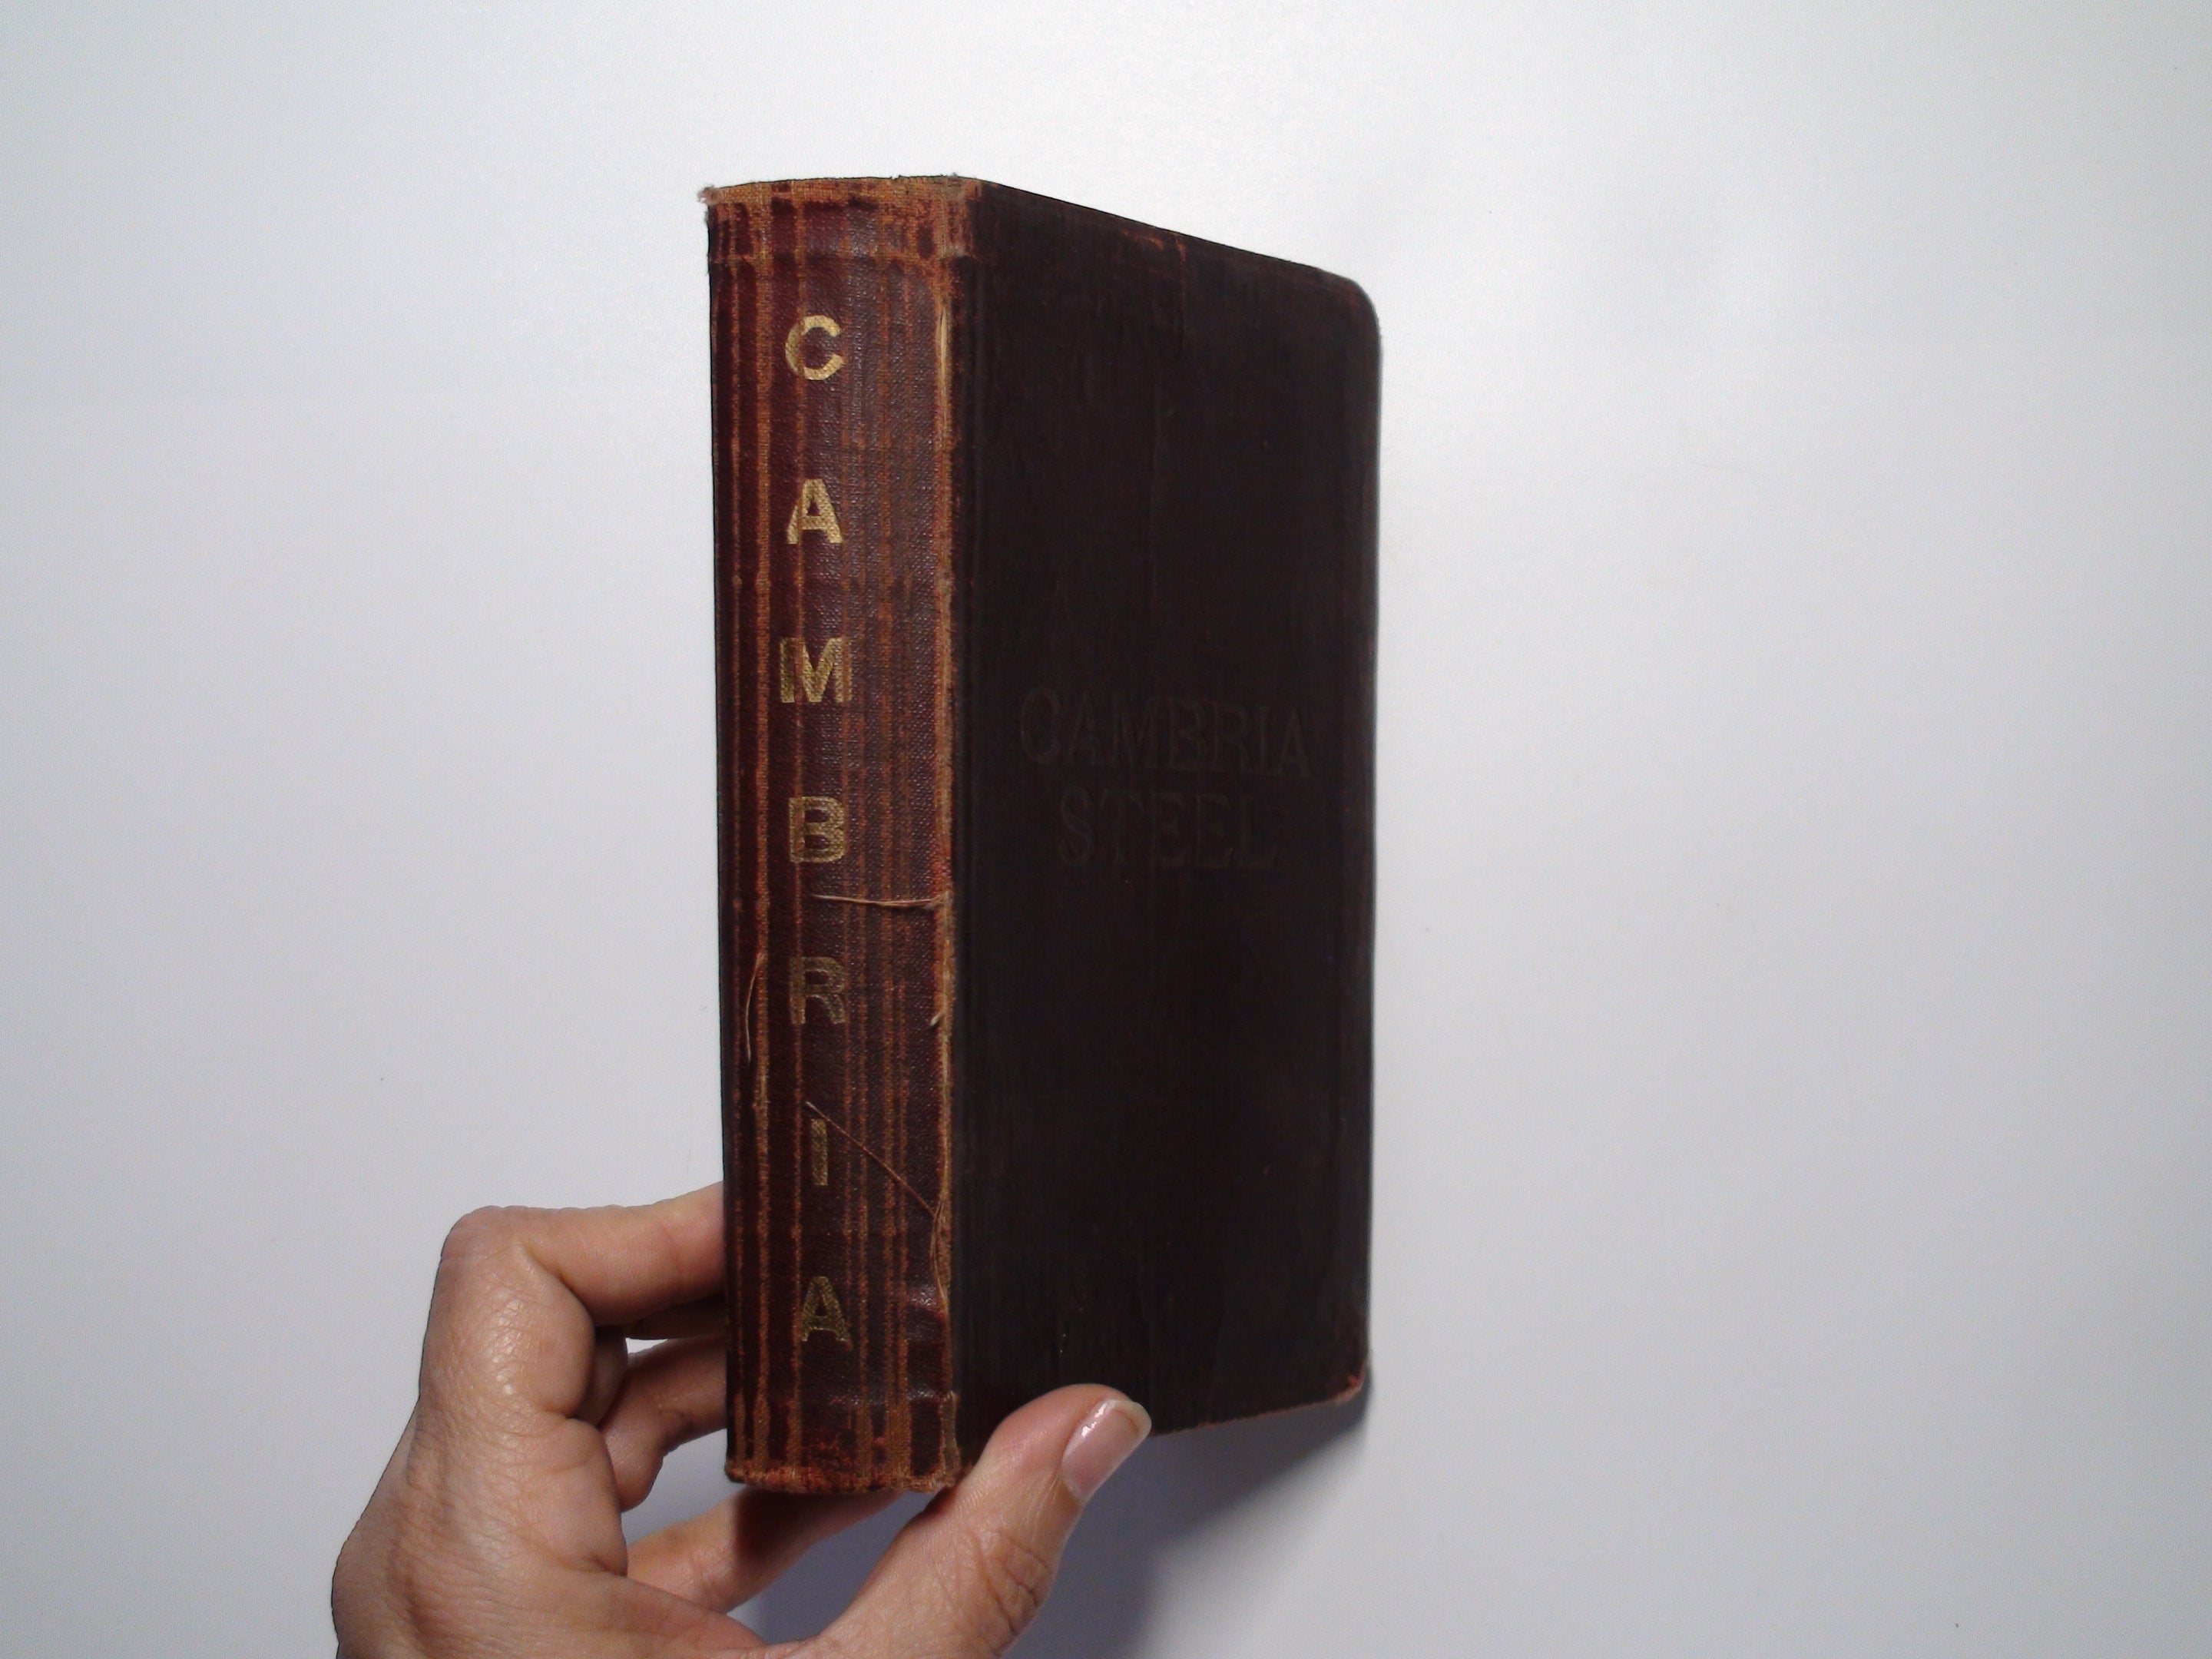 Cambria Steel Handbook and Catalog, George E. Thackray, Scarce, 1st Ed, 1919